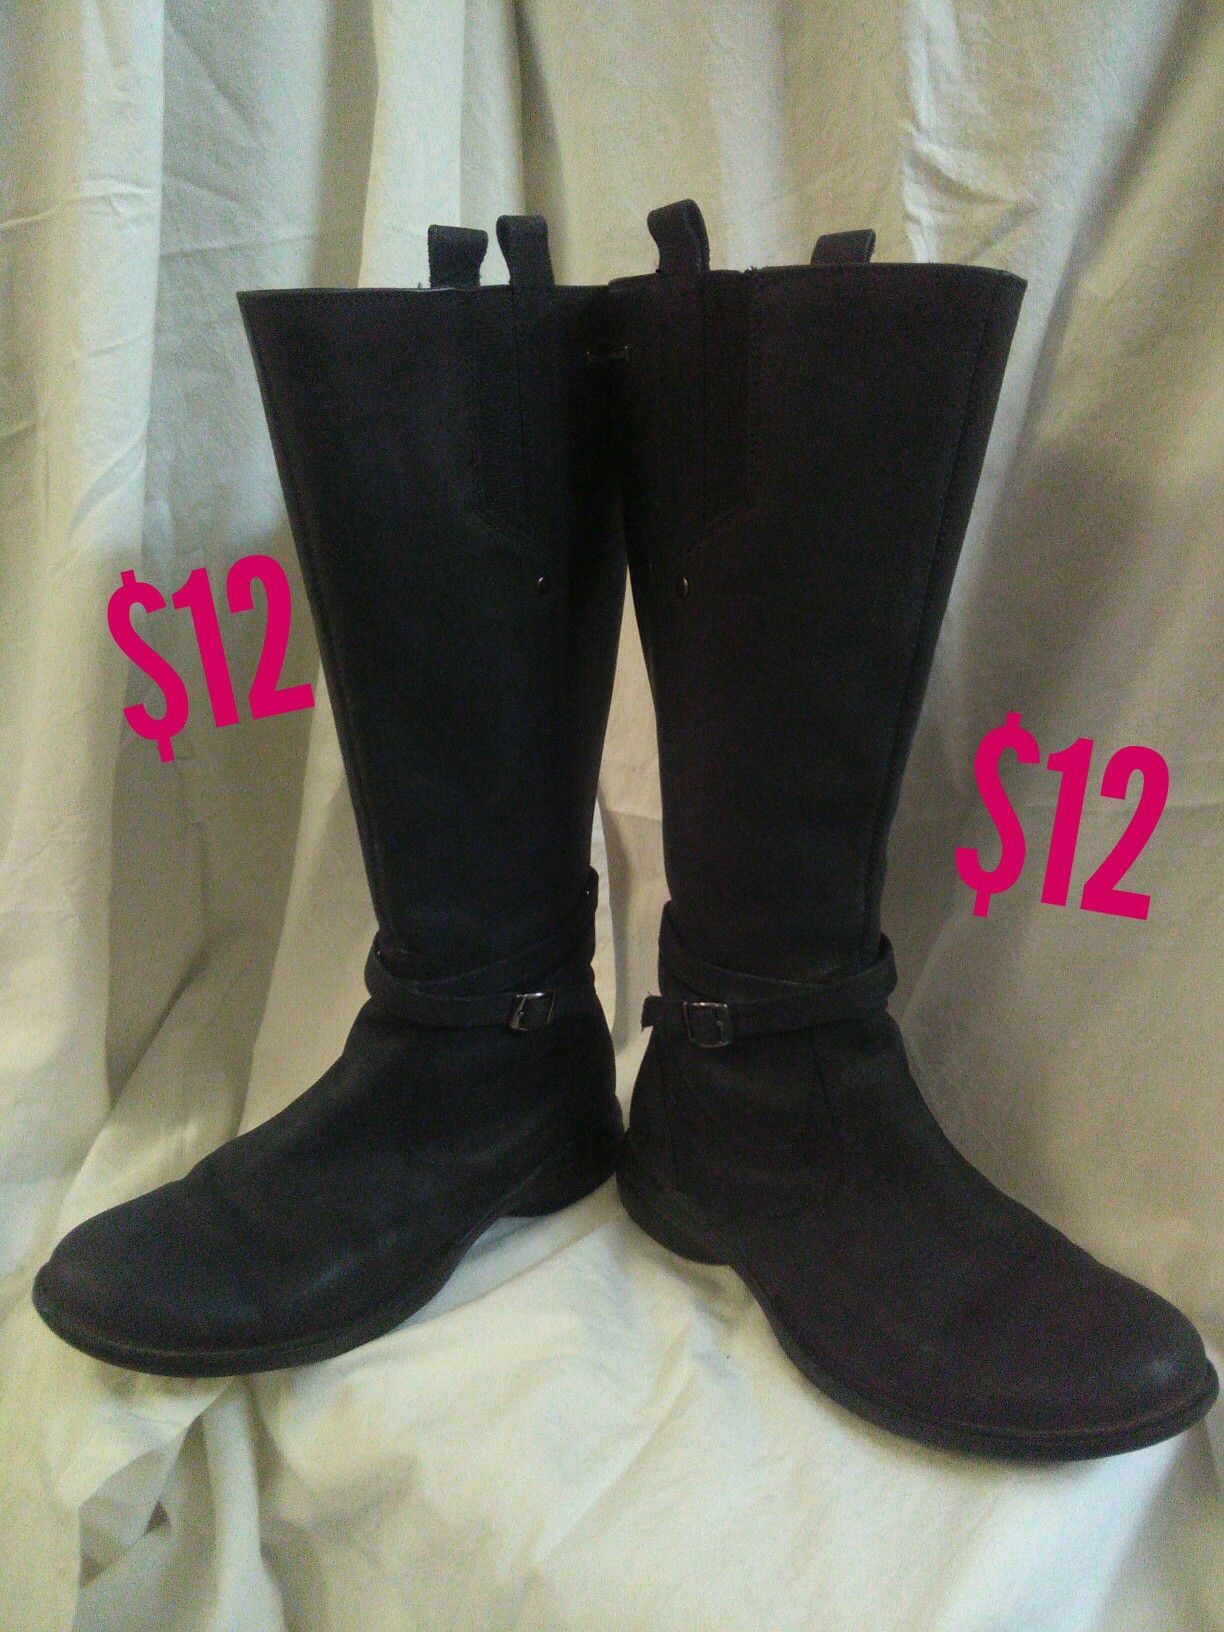 Merrell Waterproof Women's Boots Size 8.5